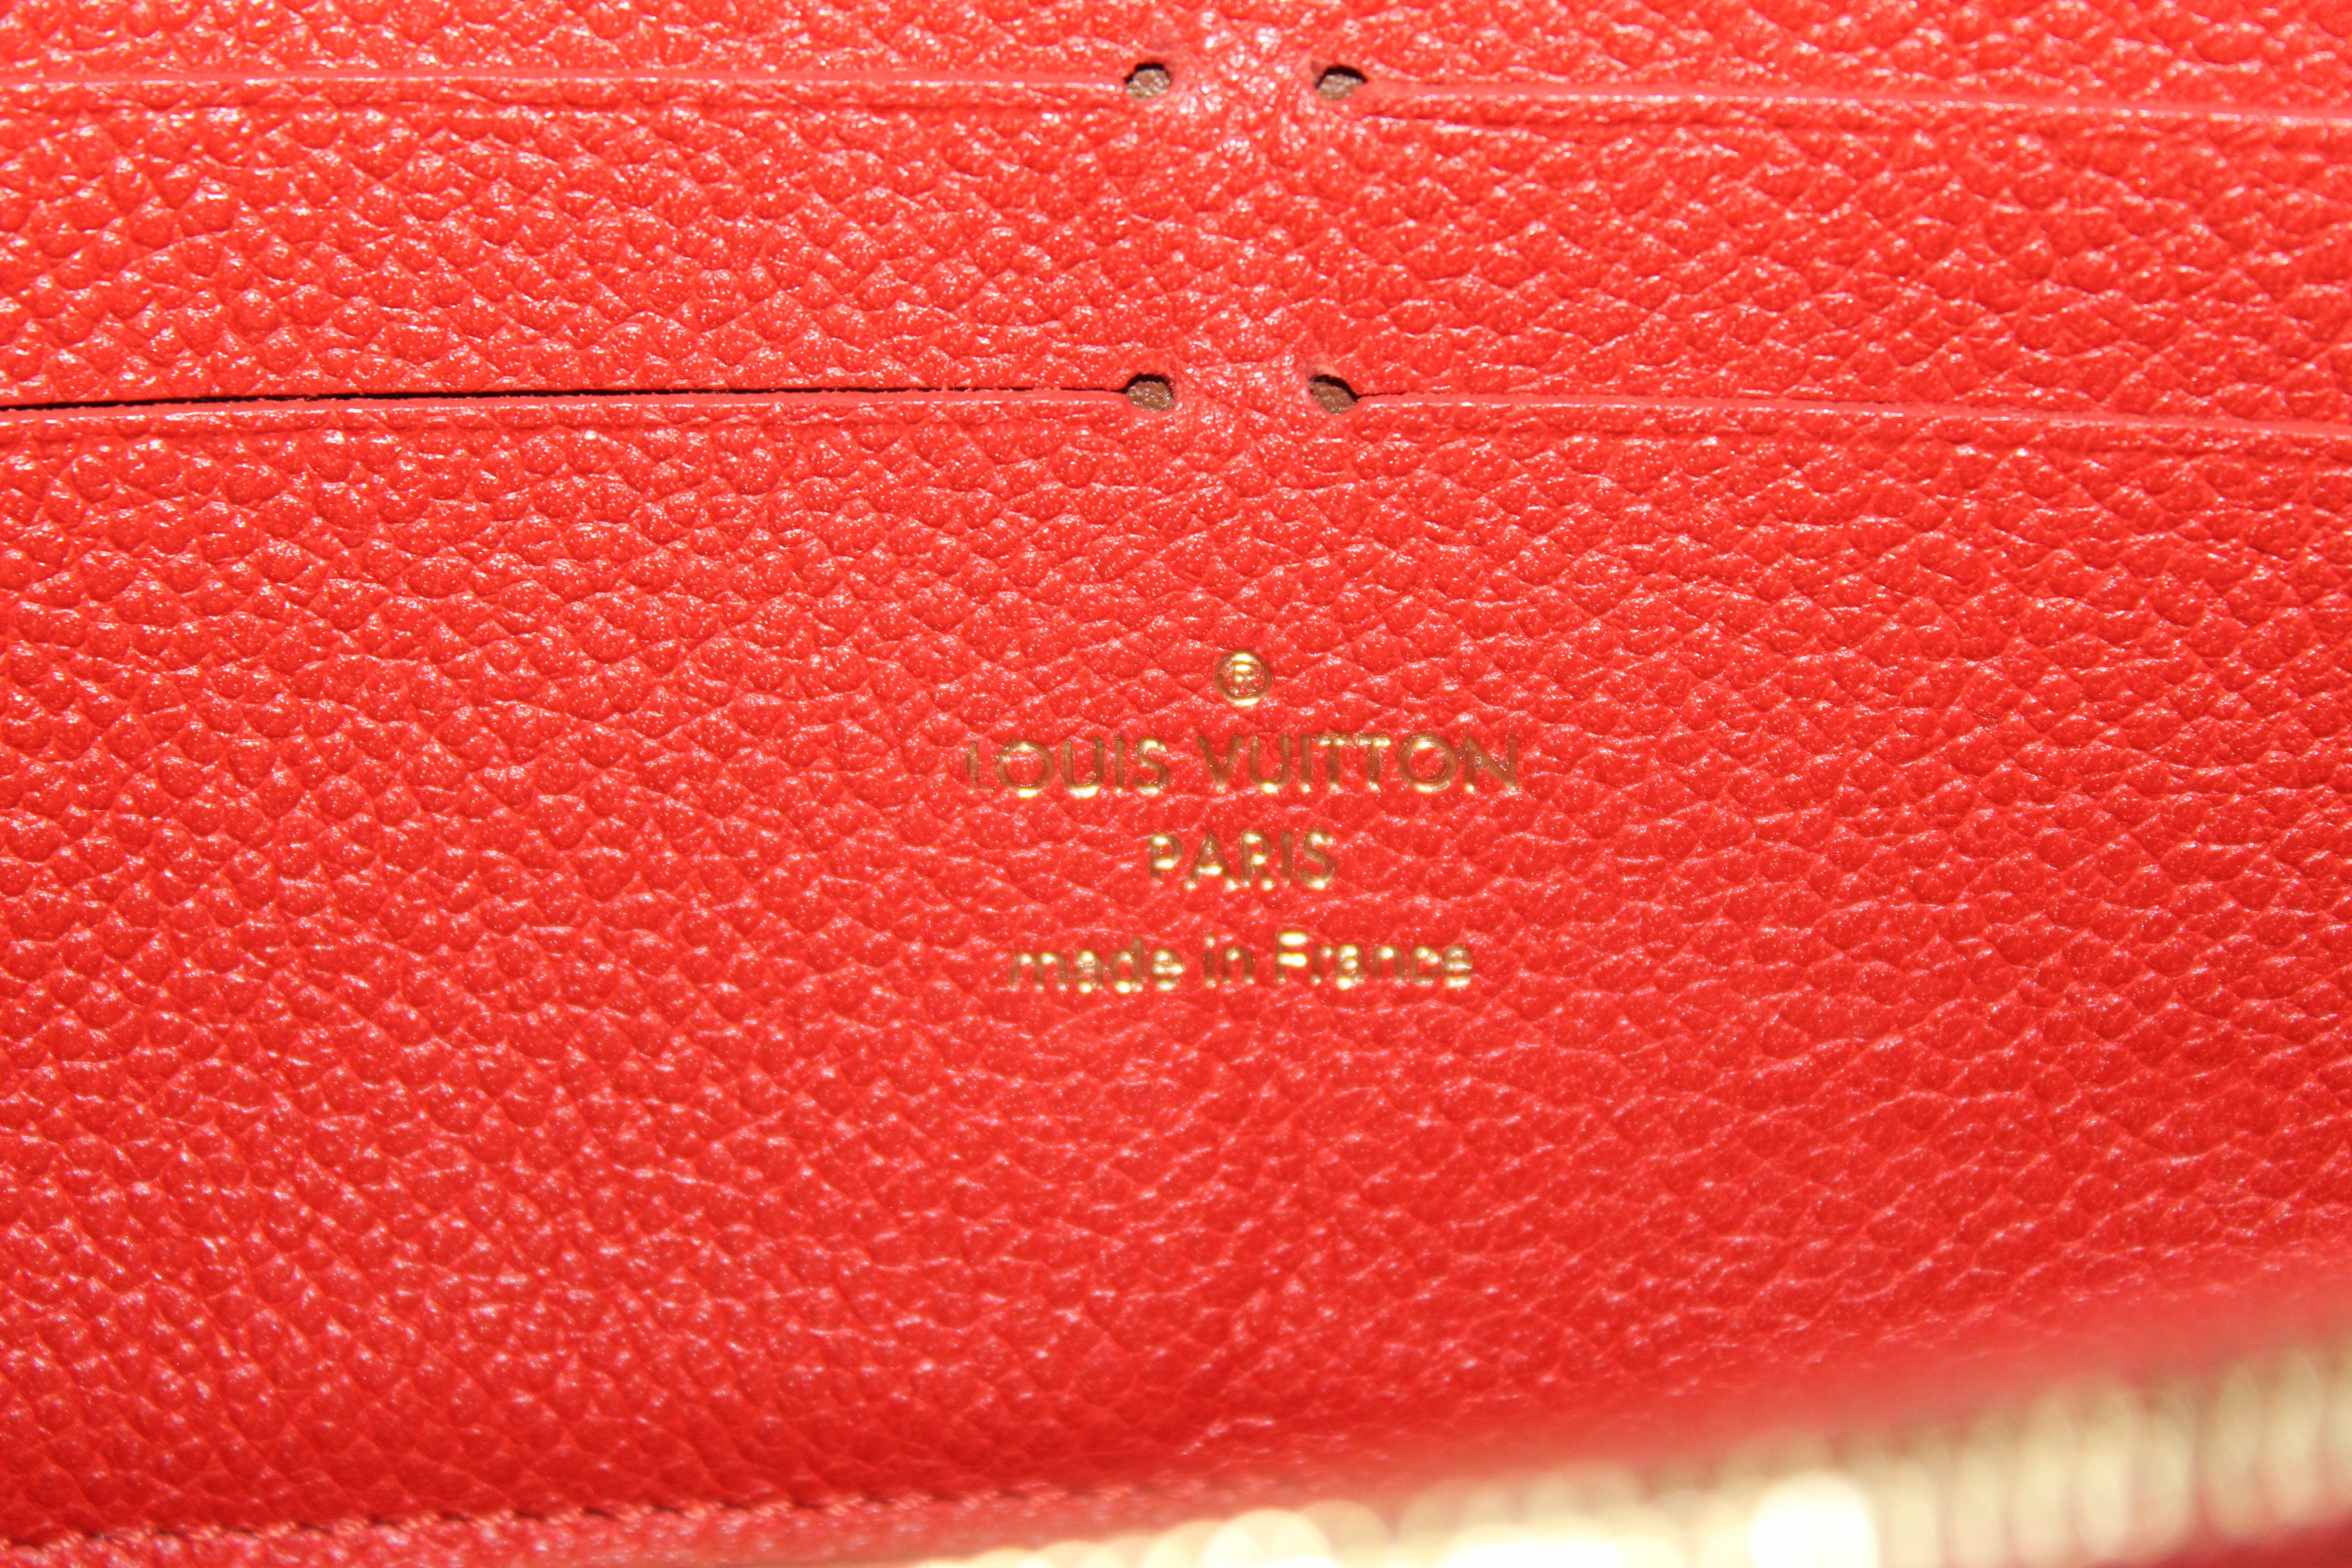 Louis Vuitton Lv zippy wallet stamped monogram original leather